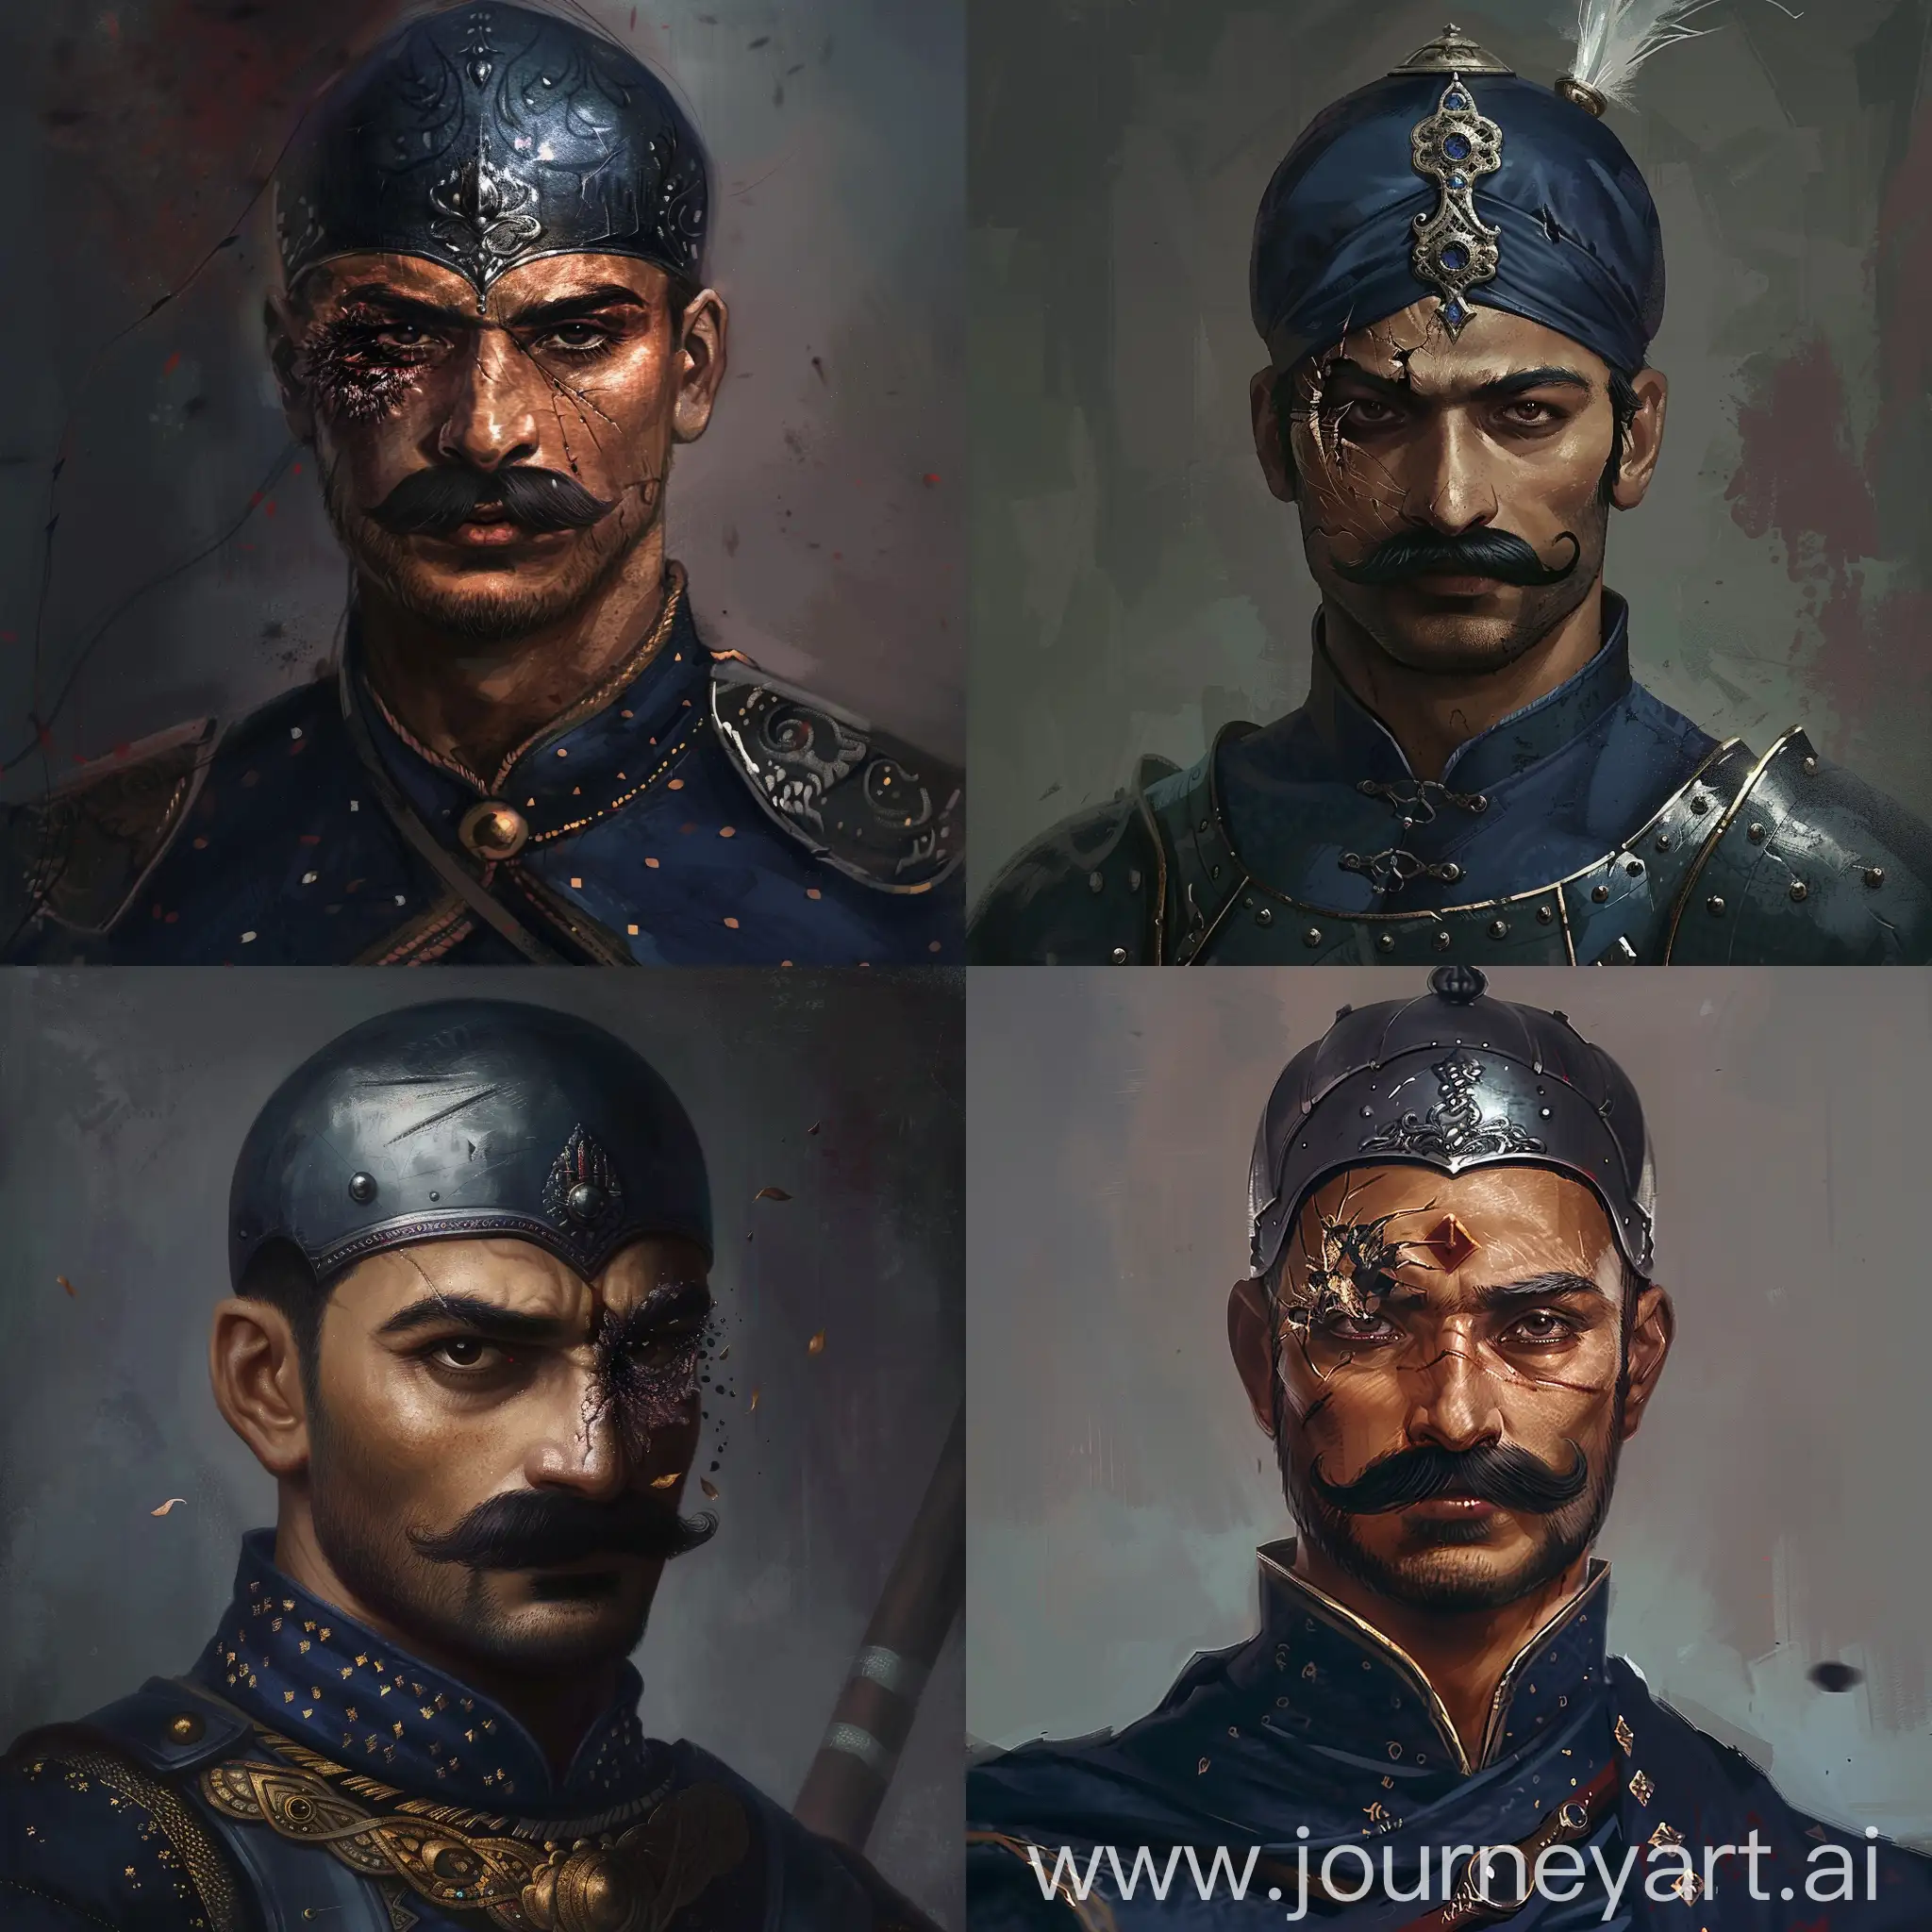 Maharana-Sanga-Fierce-Rajput-Ruler-in-Navy-Blue-Attire-and-Armor